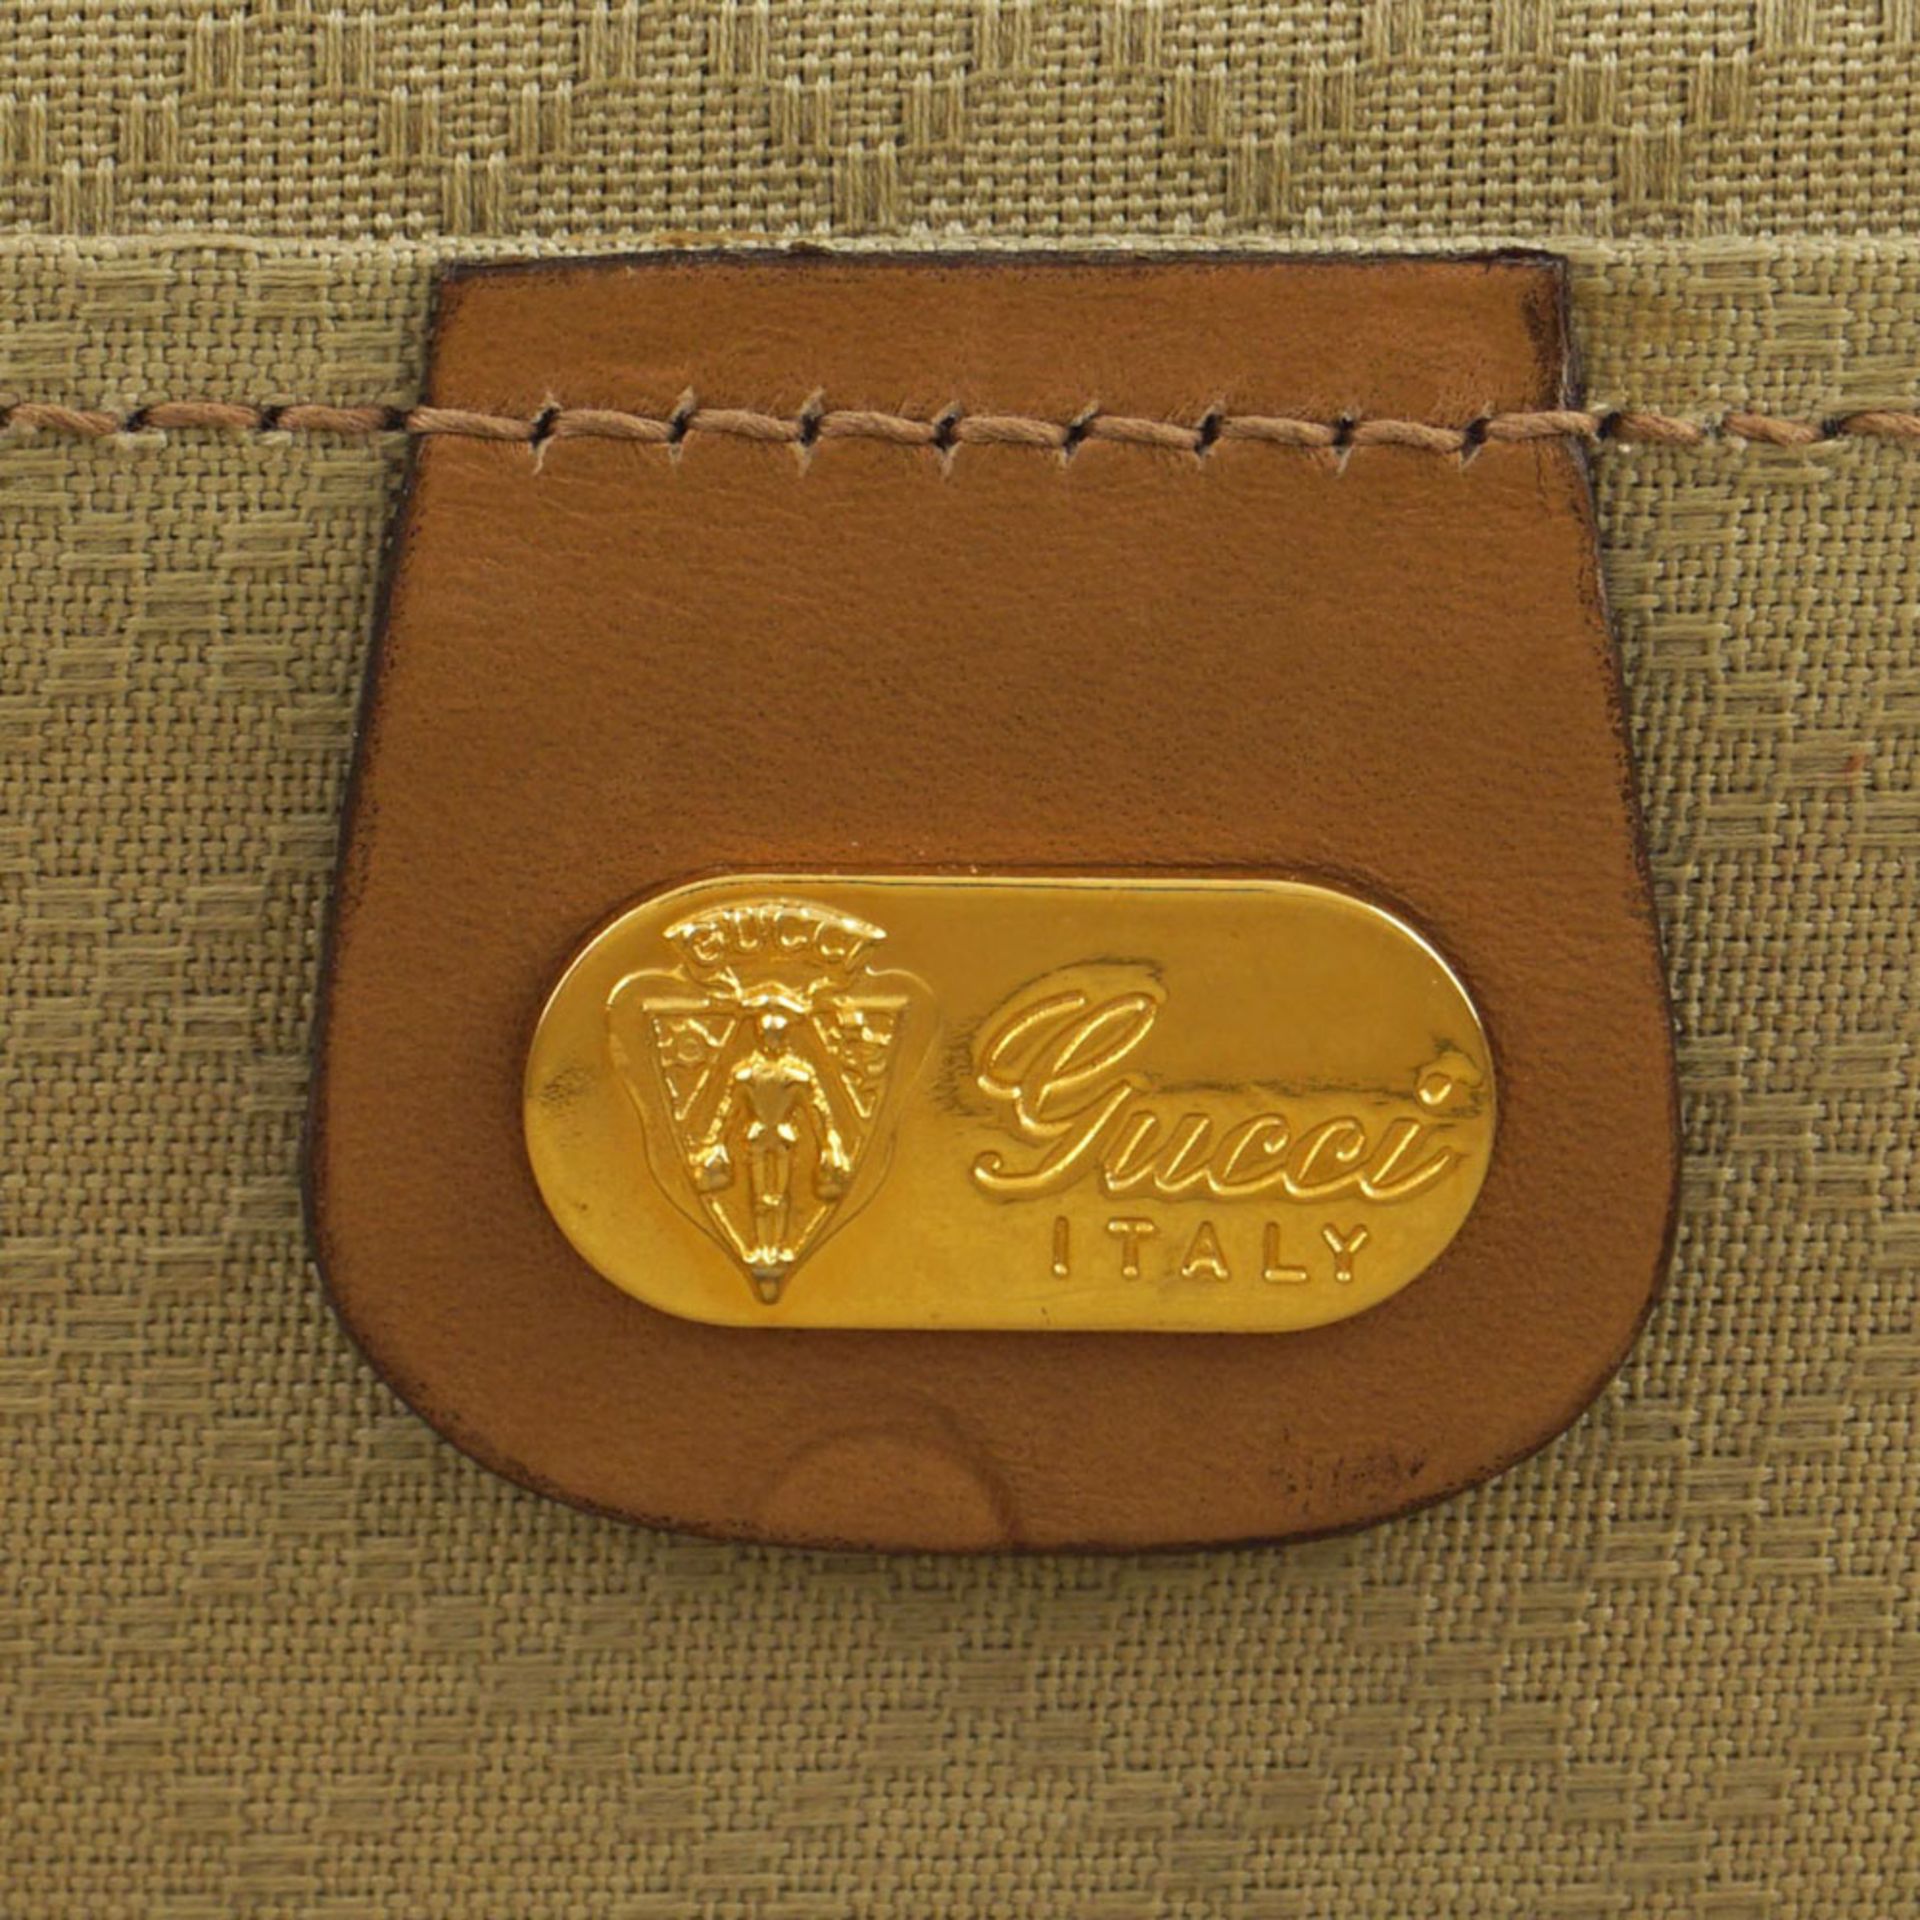 Gucci, vintage cabin suitcase 1970s circa 51,5x37x16,5 cm - Image 4 of 4